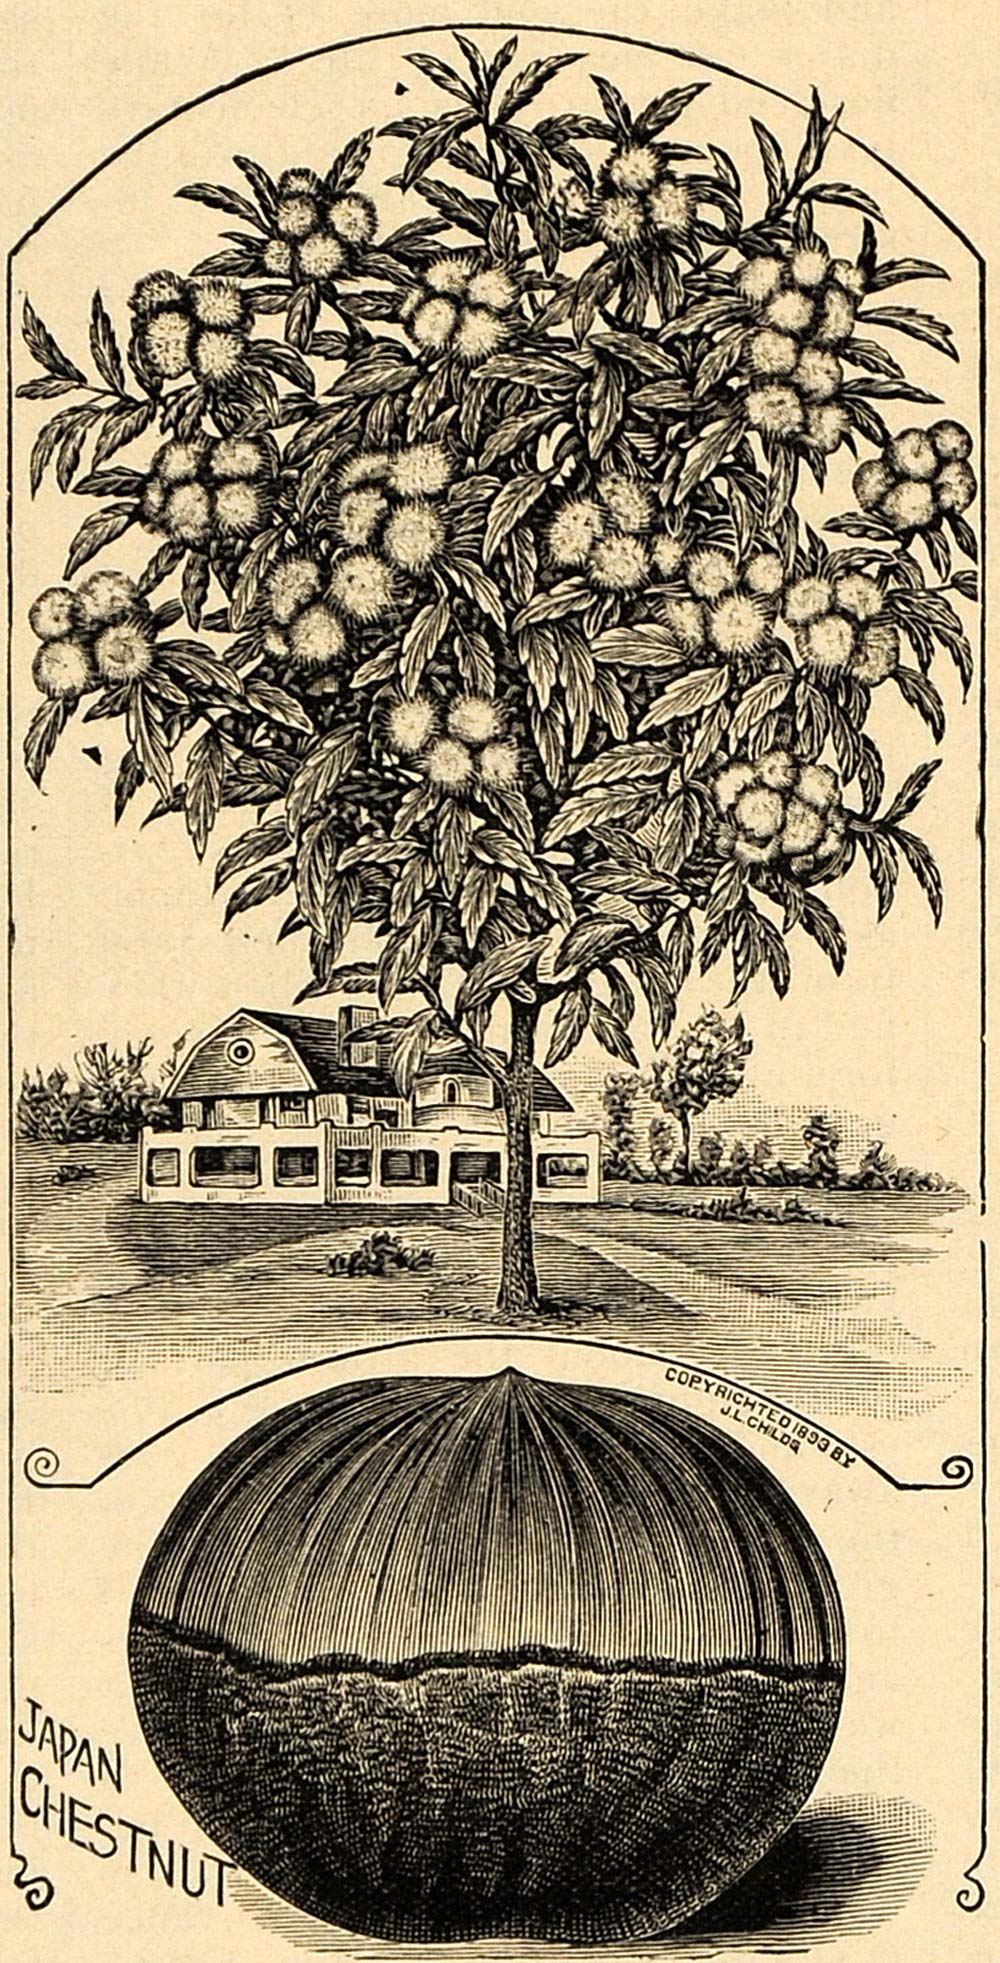 1895 Print Japan Giant Chesnut Tree Art J. L. Childs - ORIGINAL HISTORIC MAY1